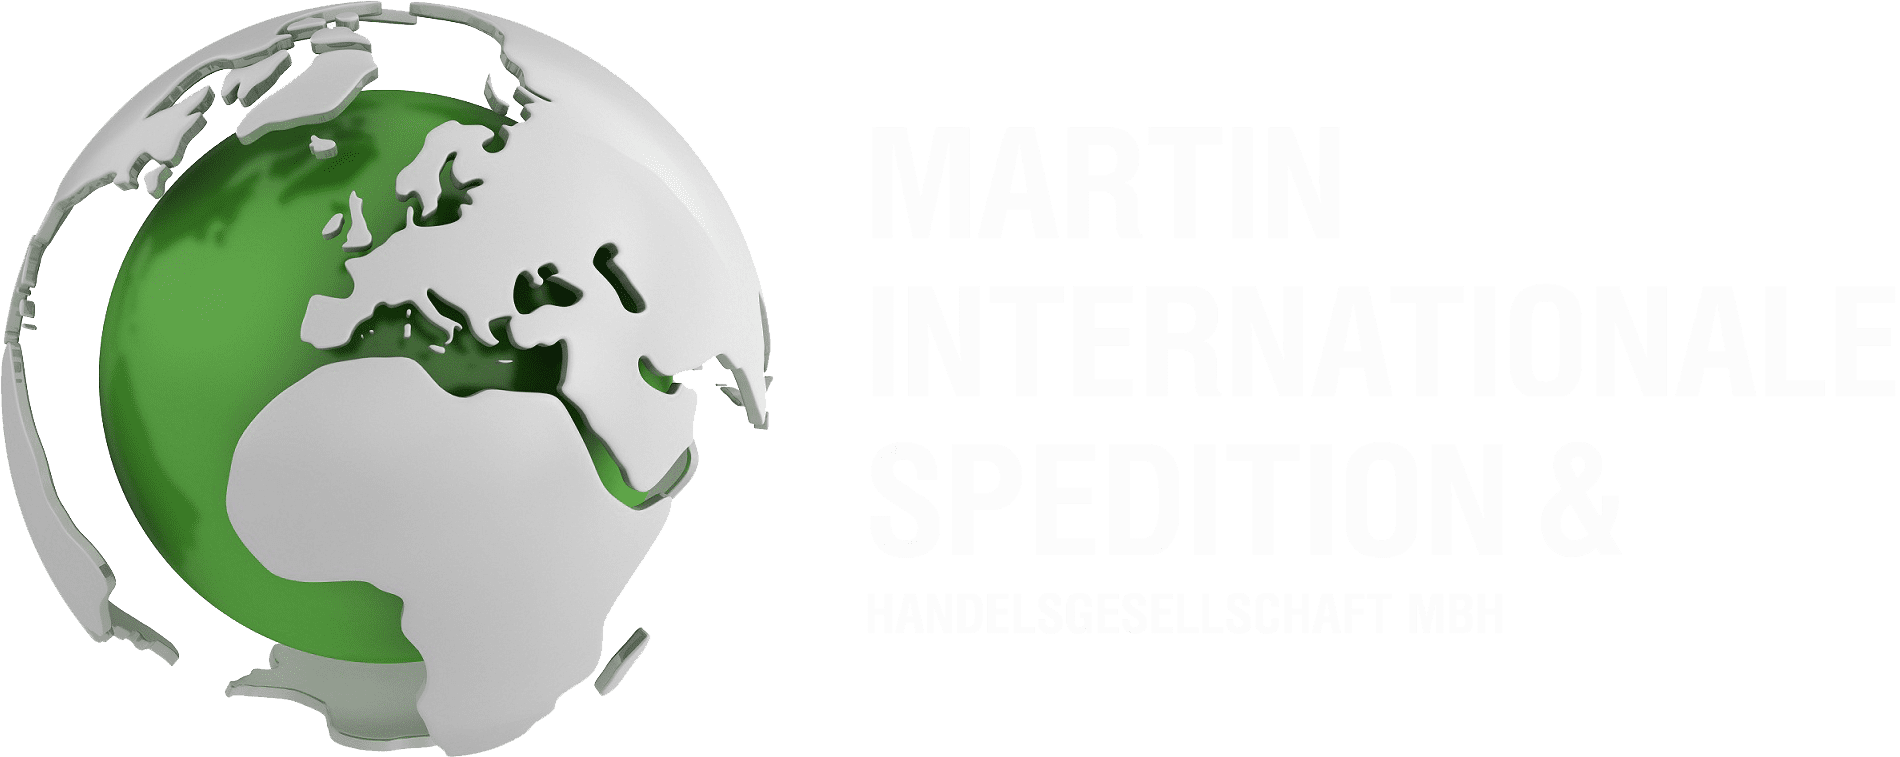 MARTIN Internationale Spedition GmbH Berlin LOGO